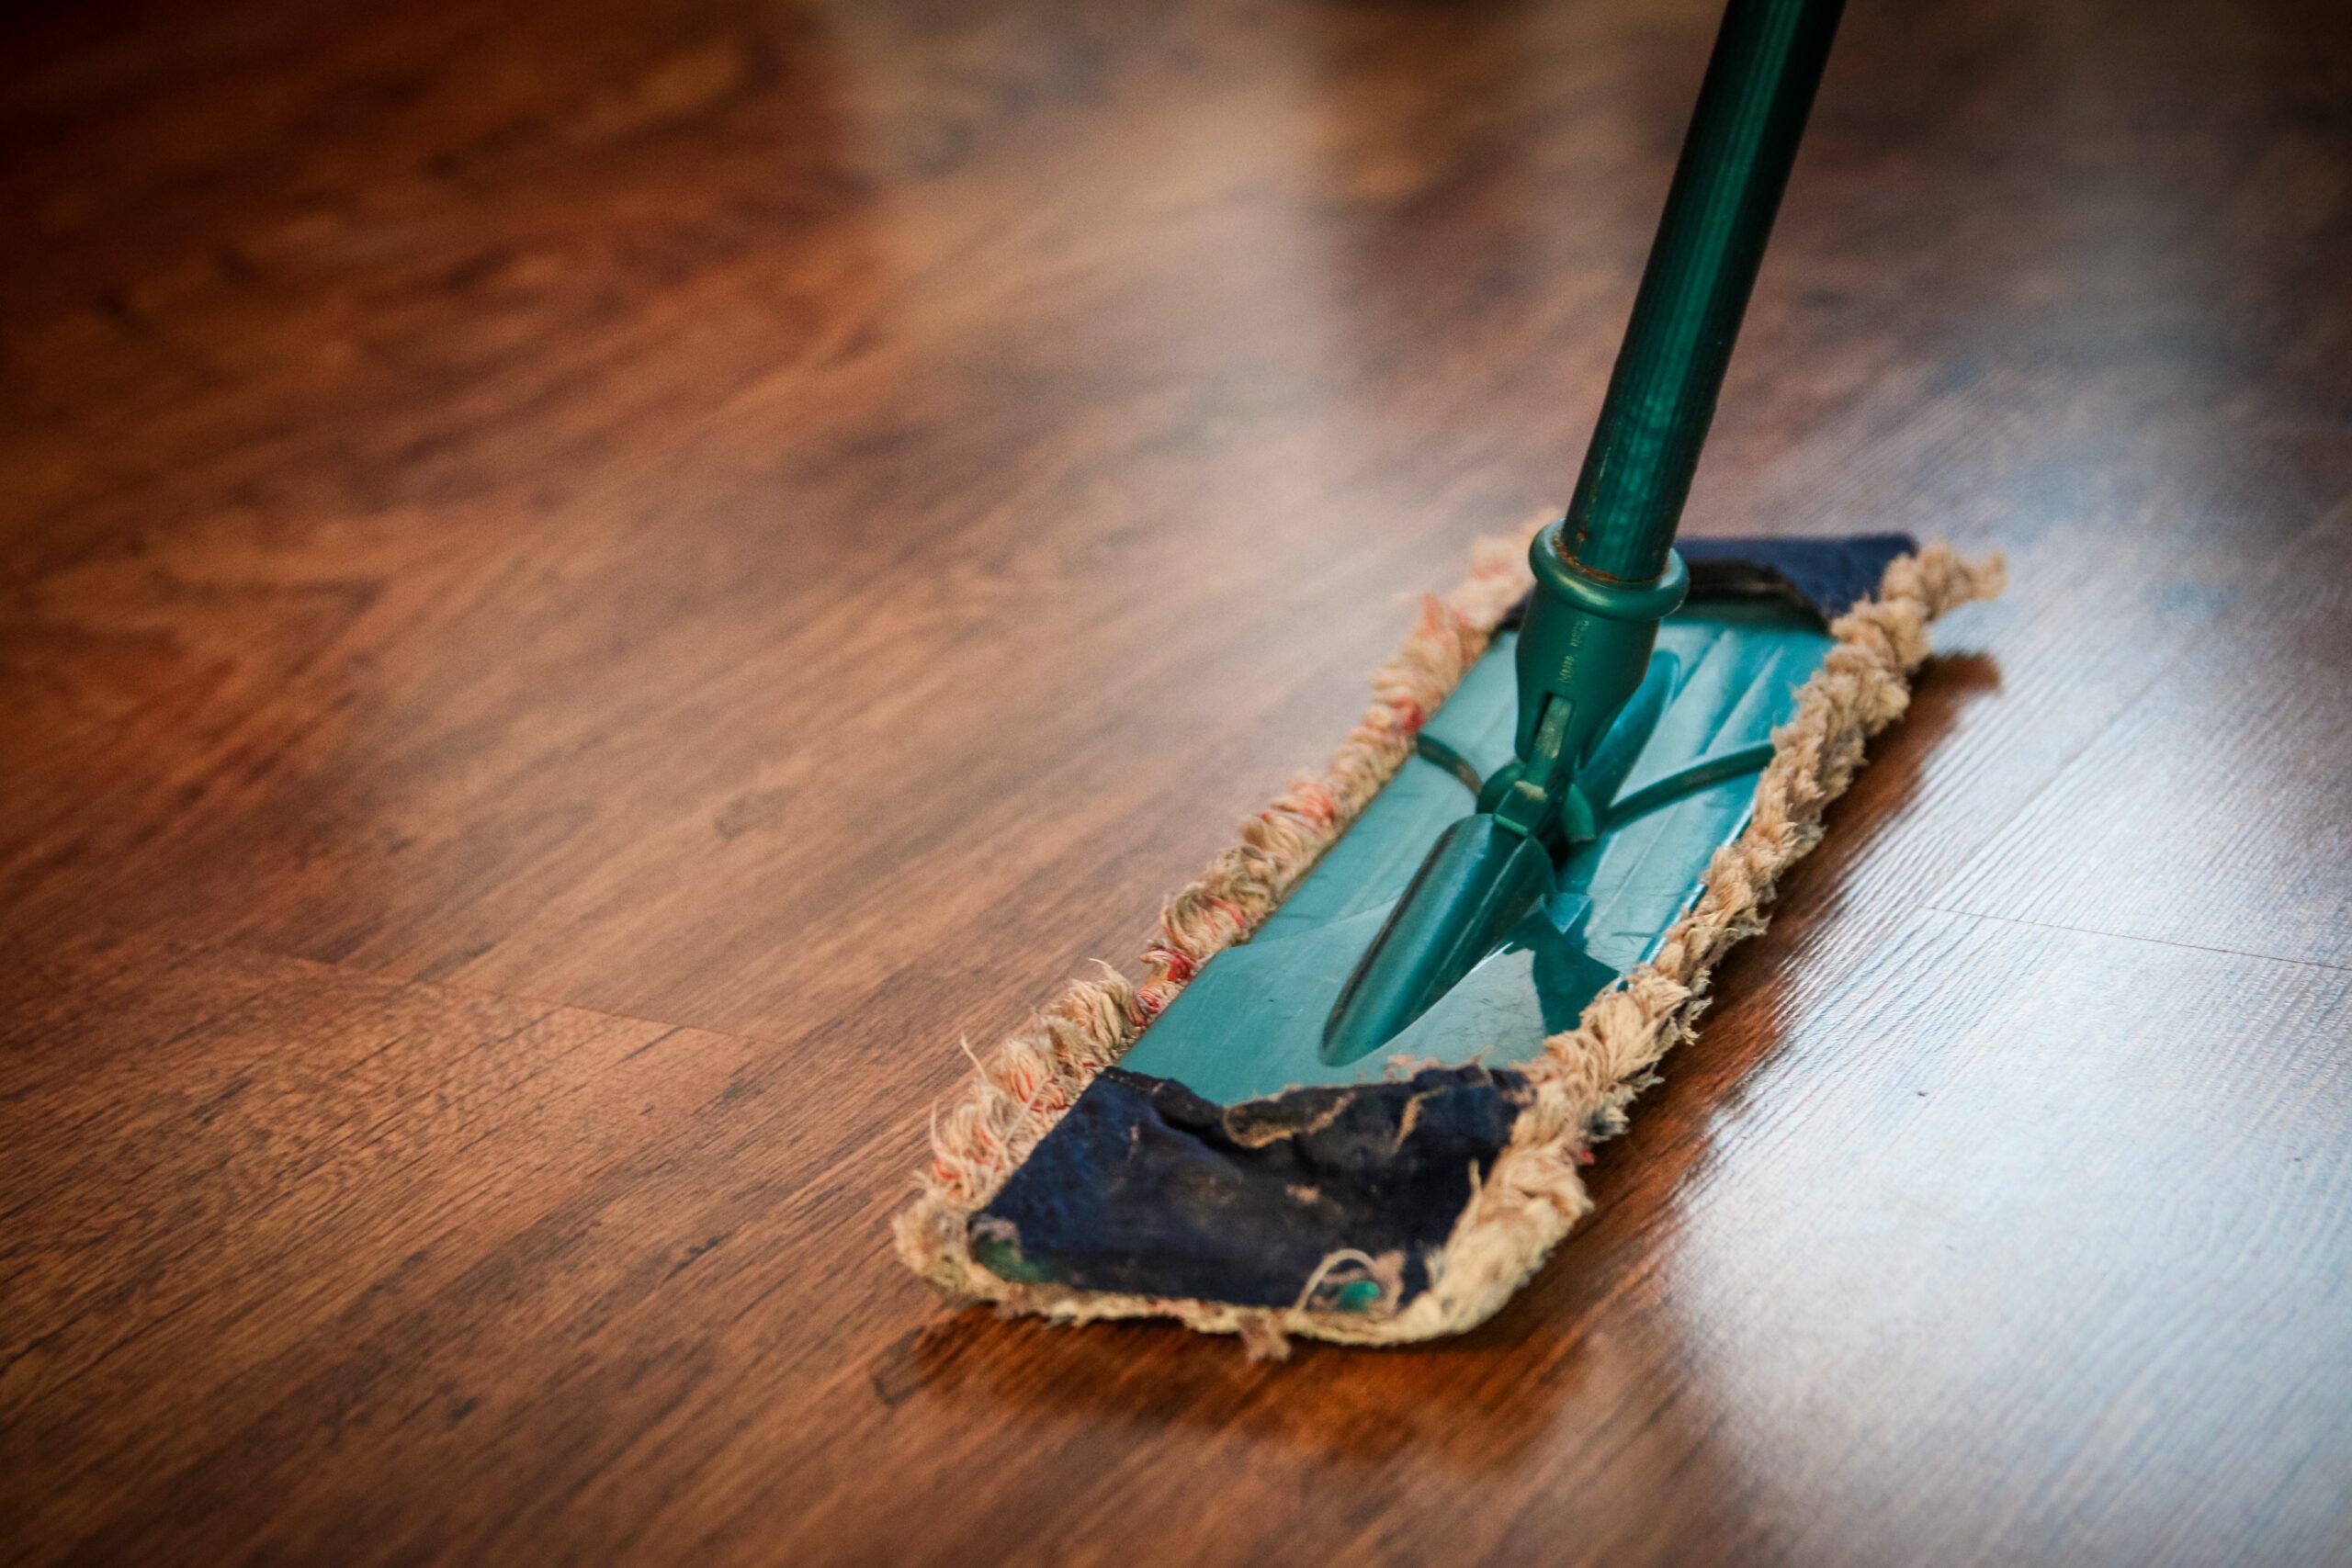 A mop on a hardwood floor.